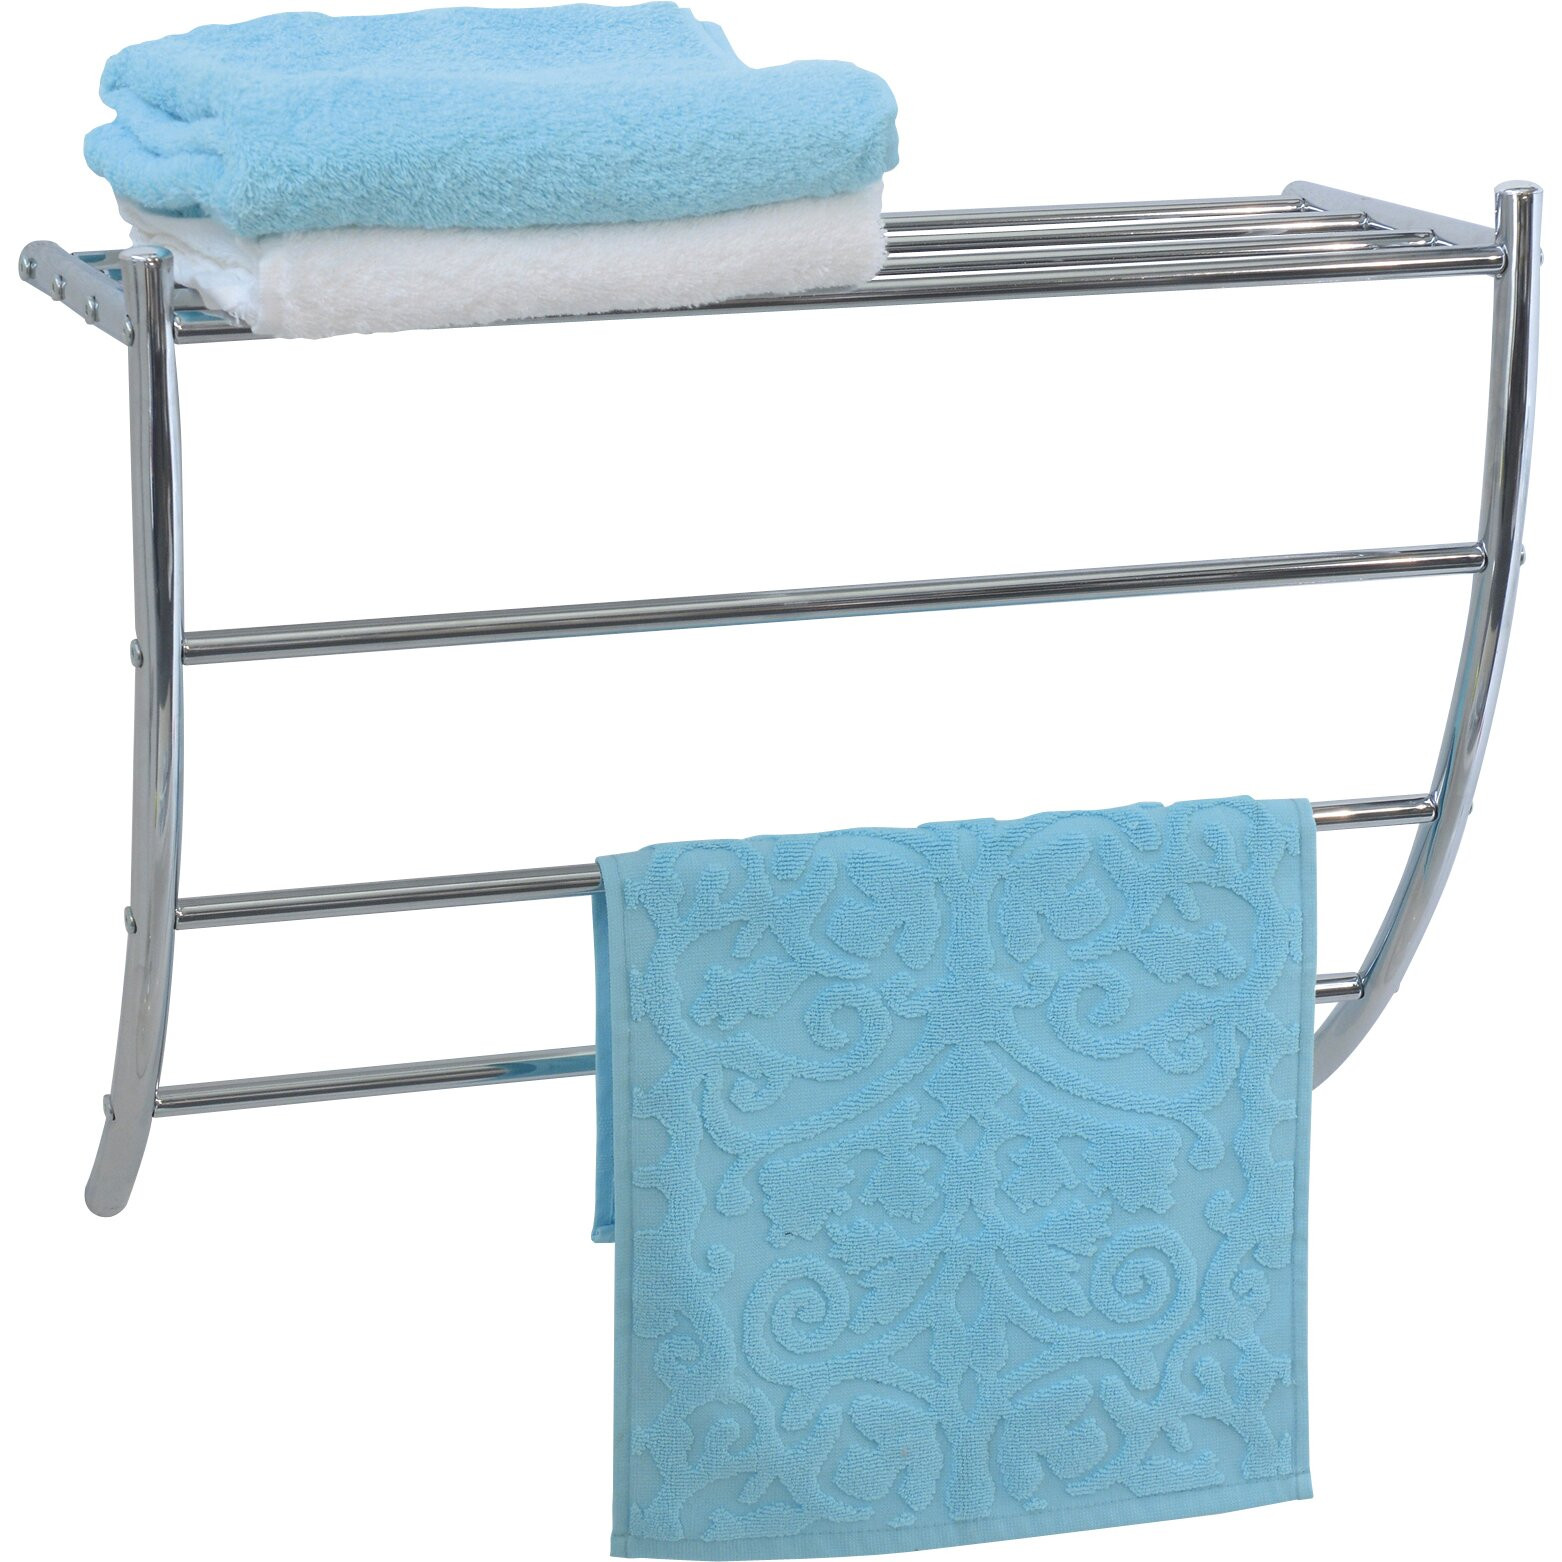 Bathroom Wall Towel Rack
 Evideco Wall Mounted Bath Shelf and Towel Rack & Reviews